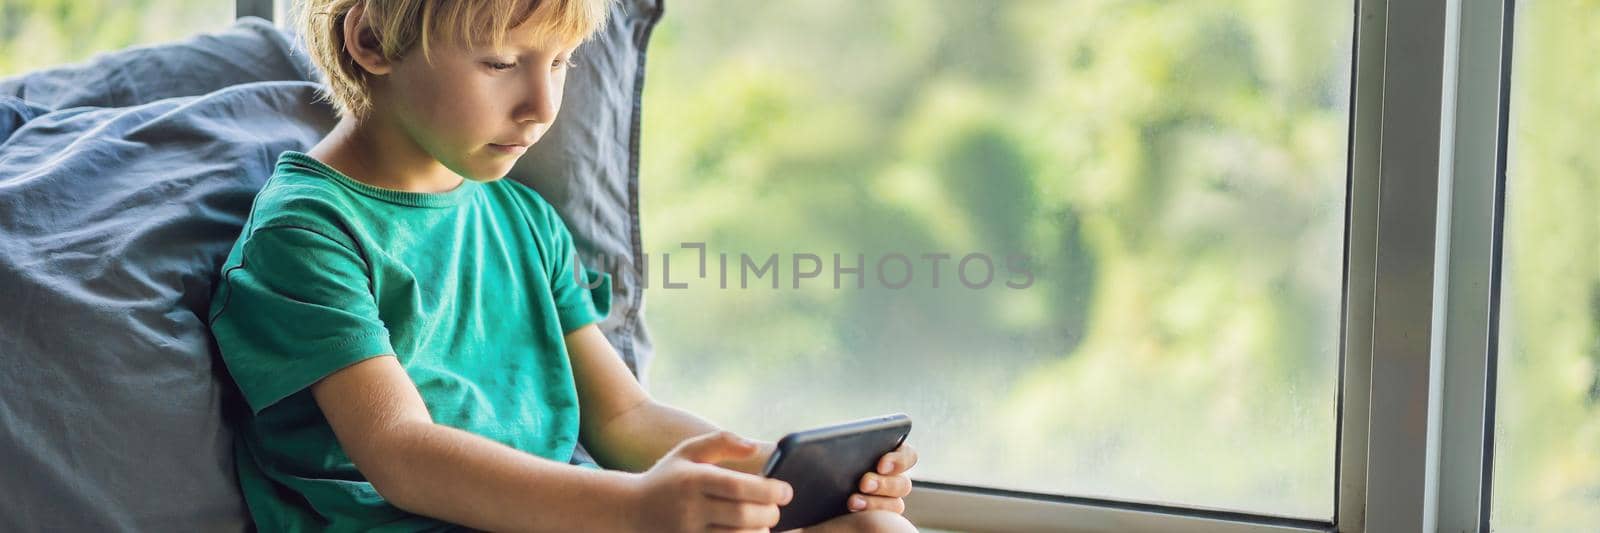 Little blond boy playing games on smartphone BANNER, LONG FORMAT by galitskaya